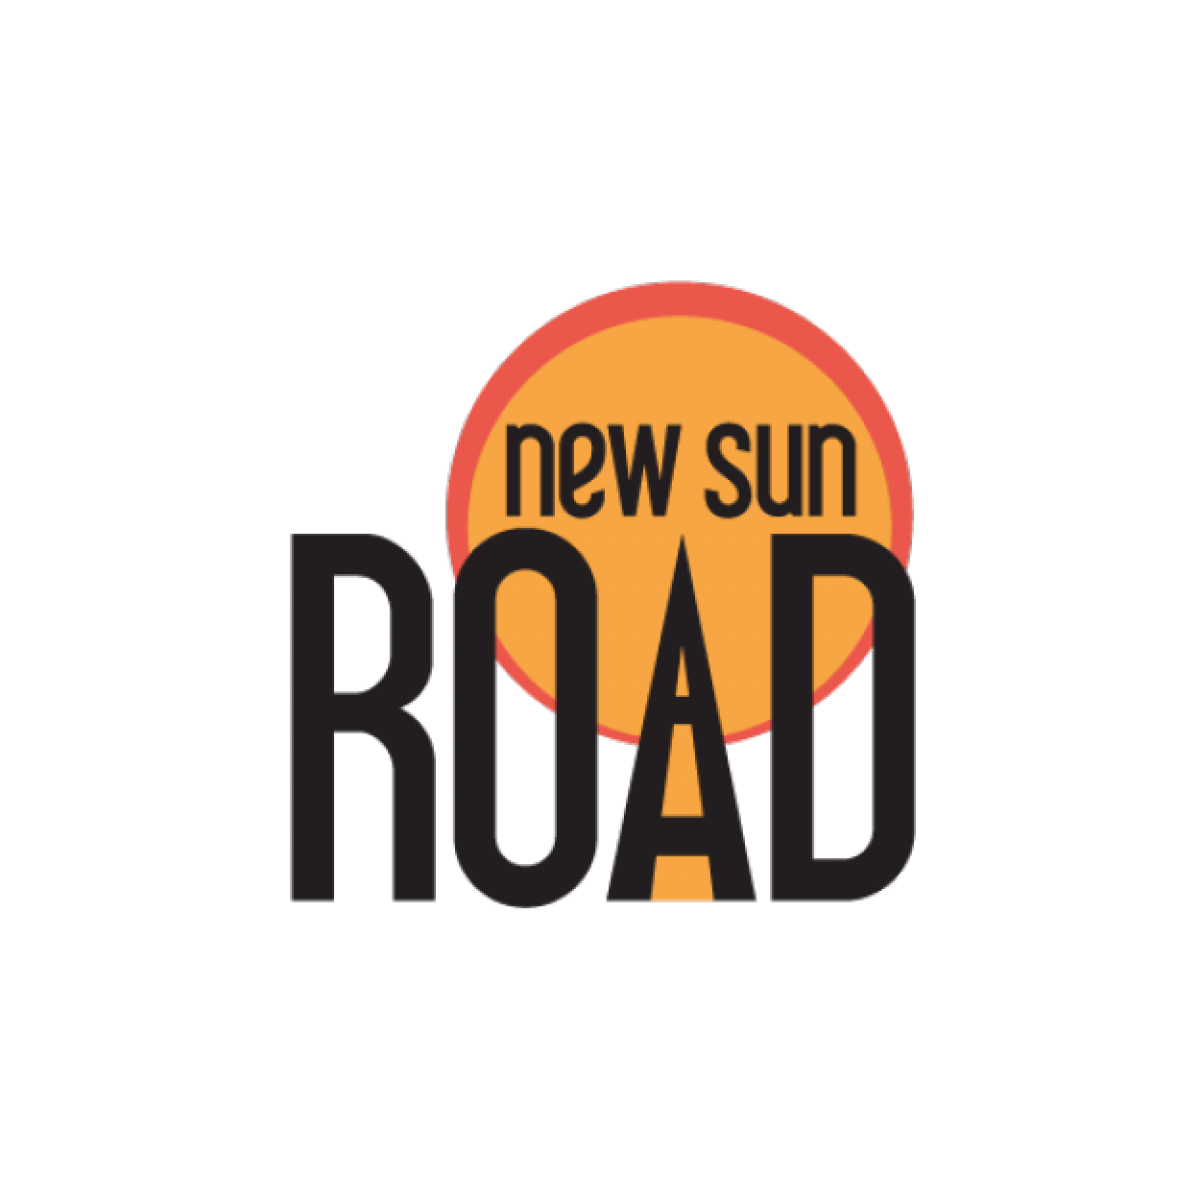 New Sun Road logo